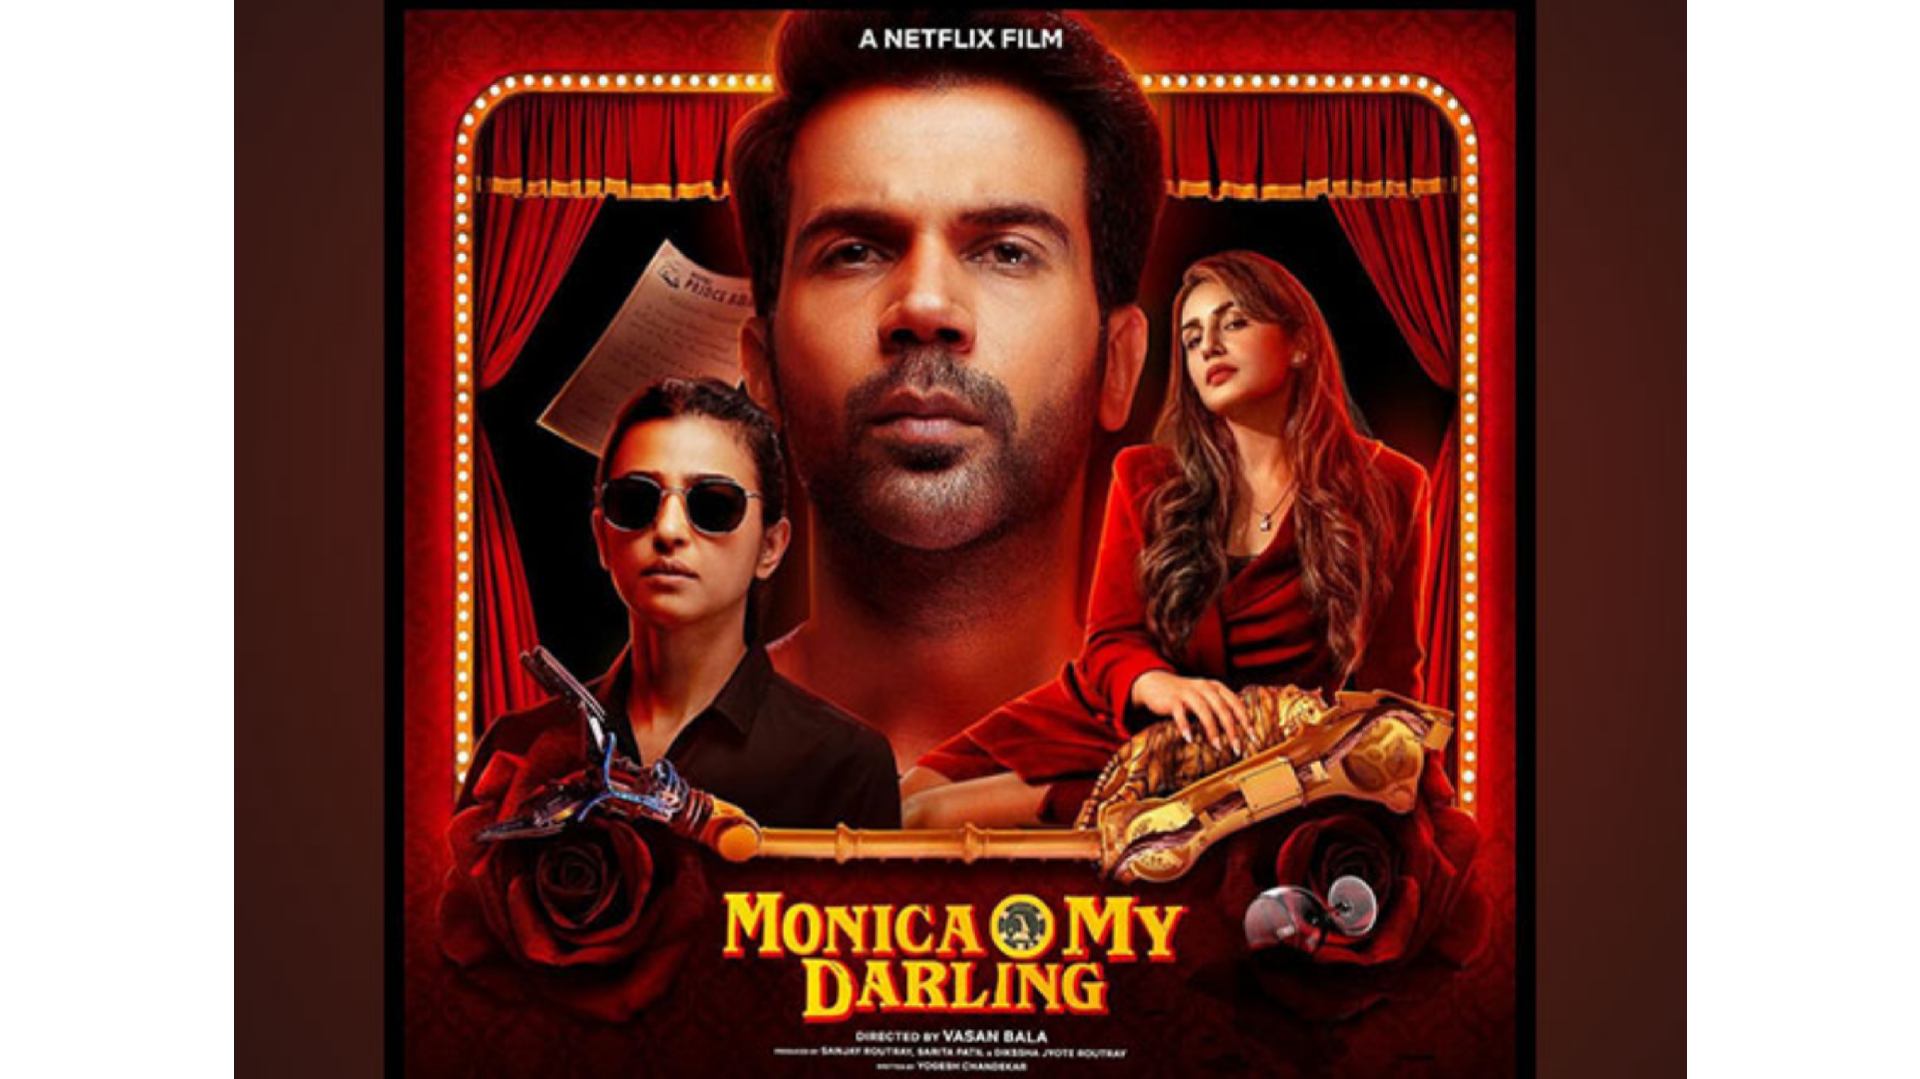 राजकुमार राव की फिल्म 'मोनिका ओ माय डार्लिंग' का ट्रेलर हुआ रिलीज